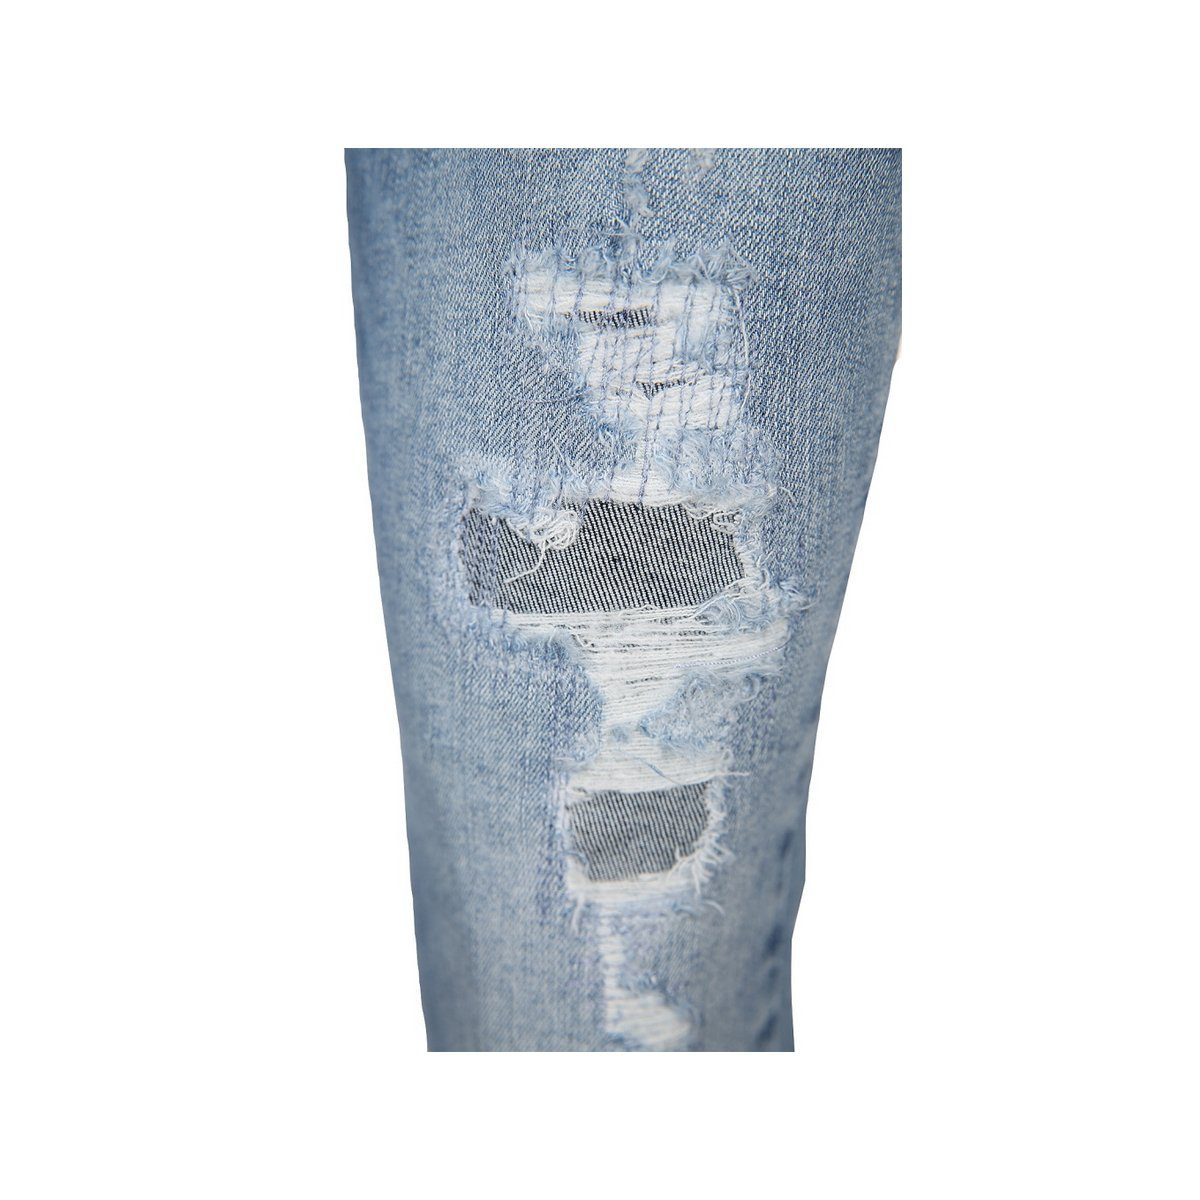 (1-tlg) MAC uni 5-Pocket-Jeans